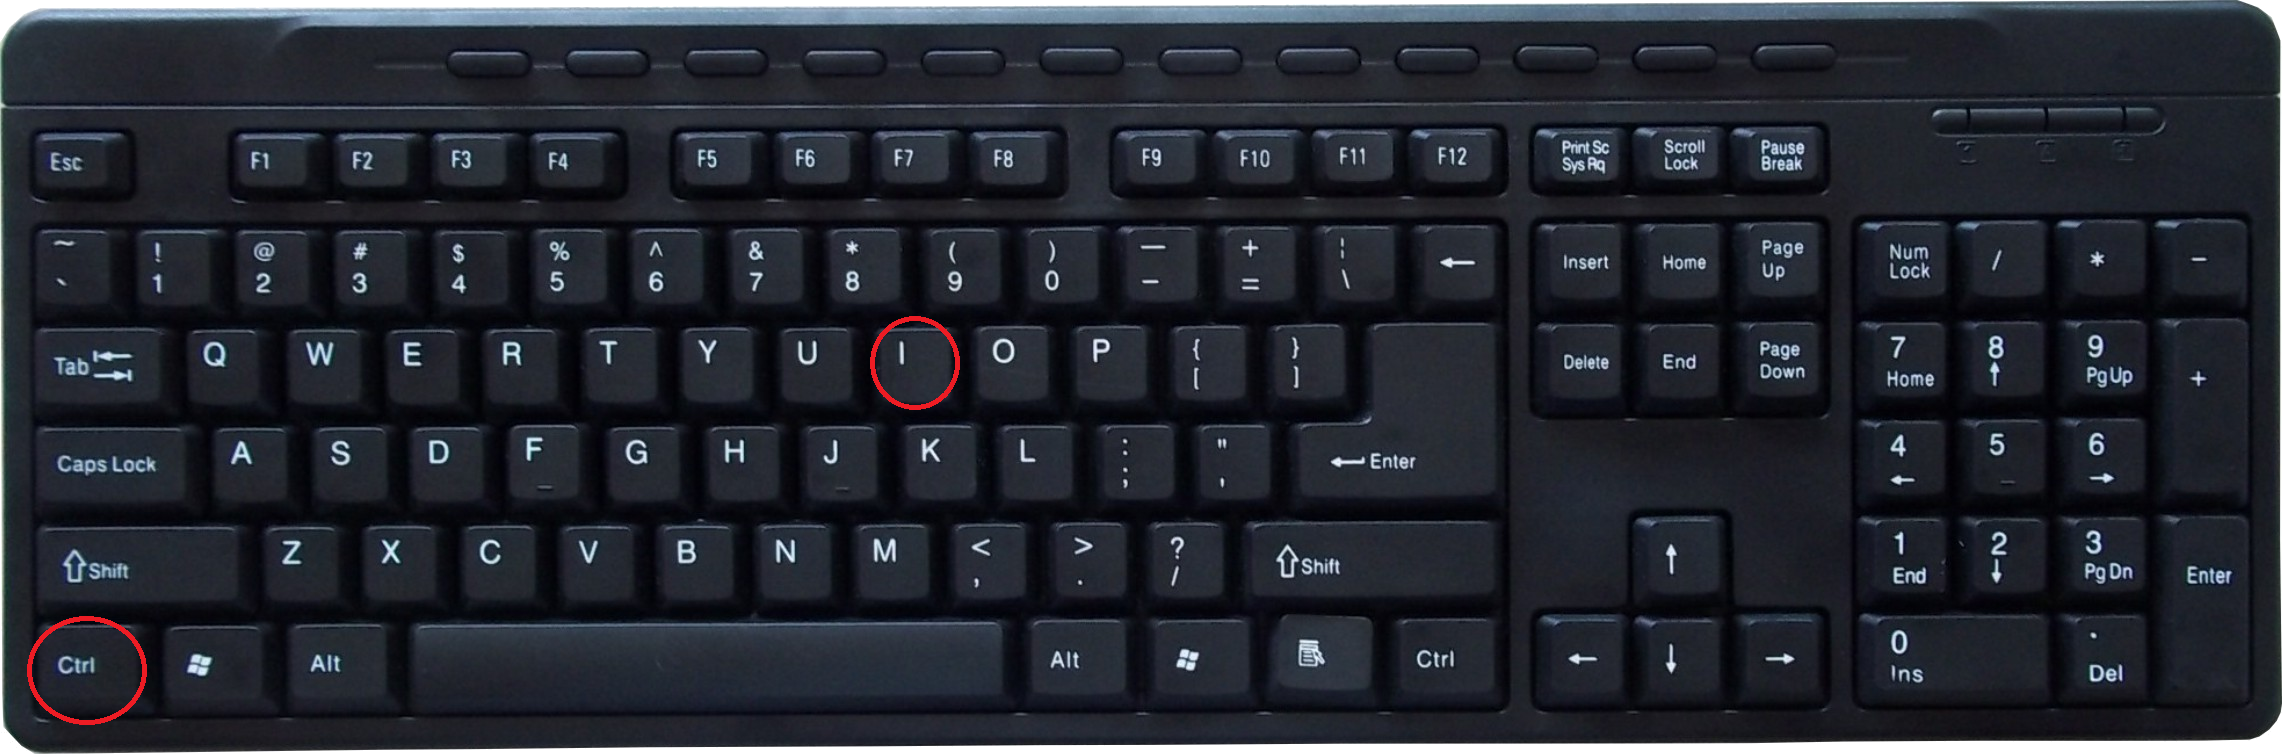 Keyboard HD PNG - 119641